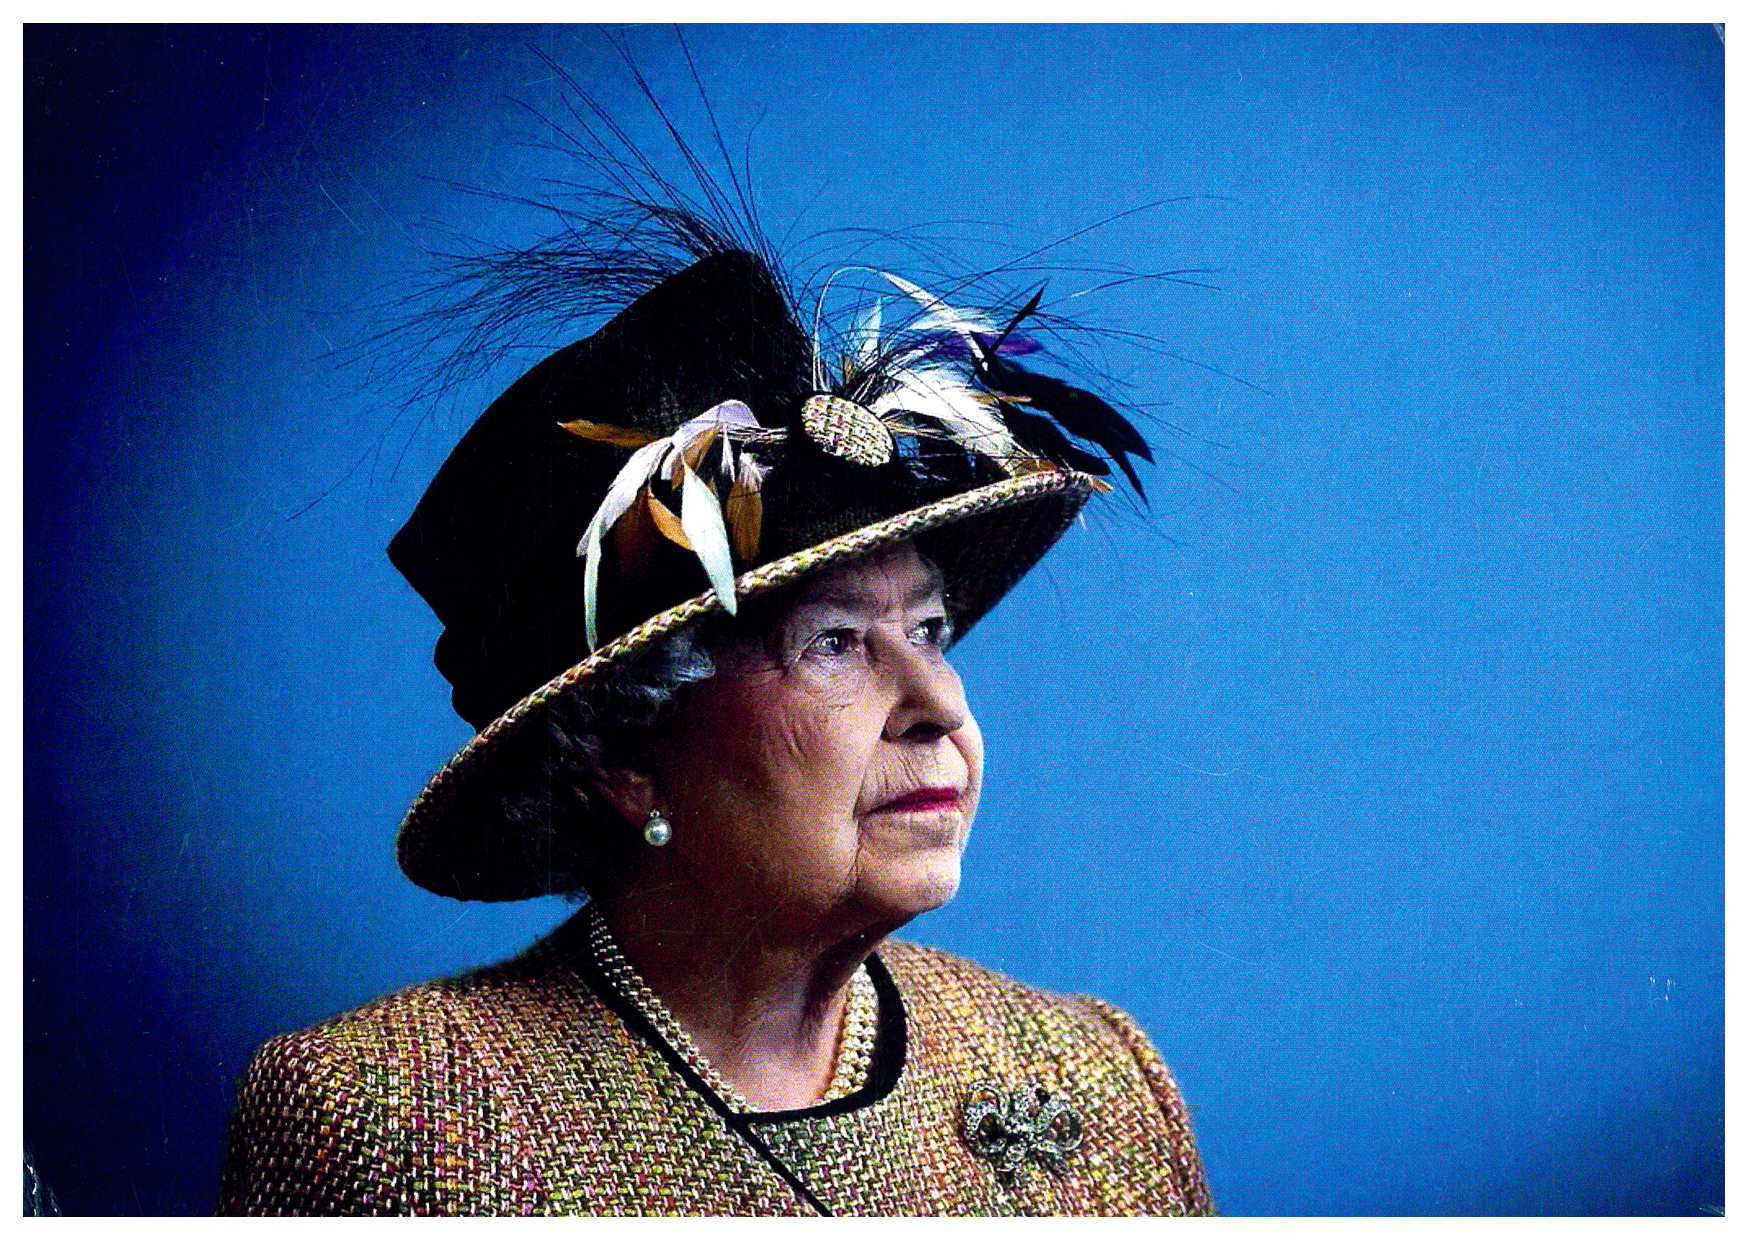 Official duties ２ days before Queen Elizabeth's death.